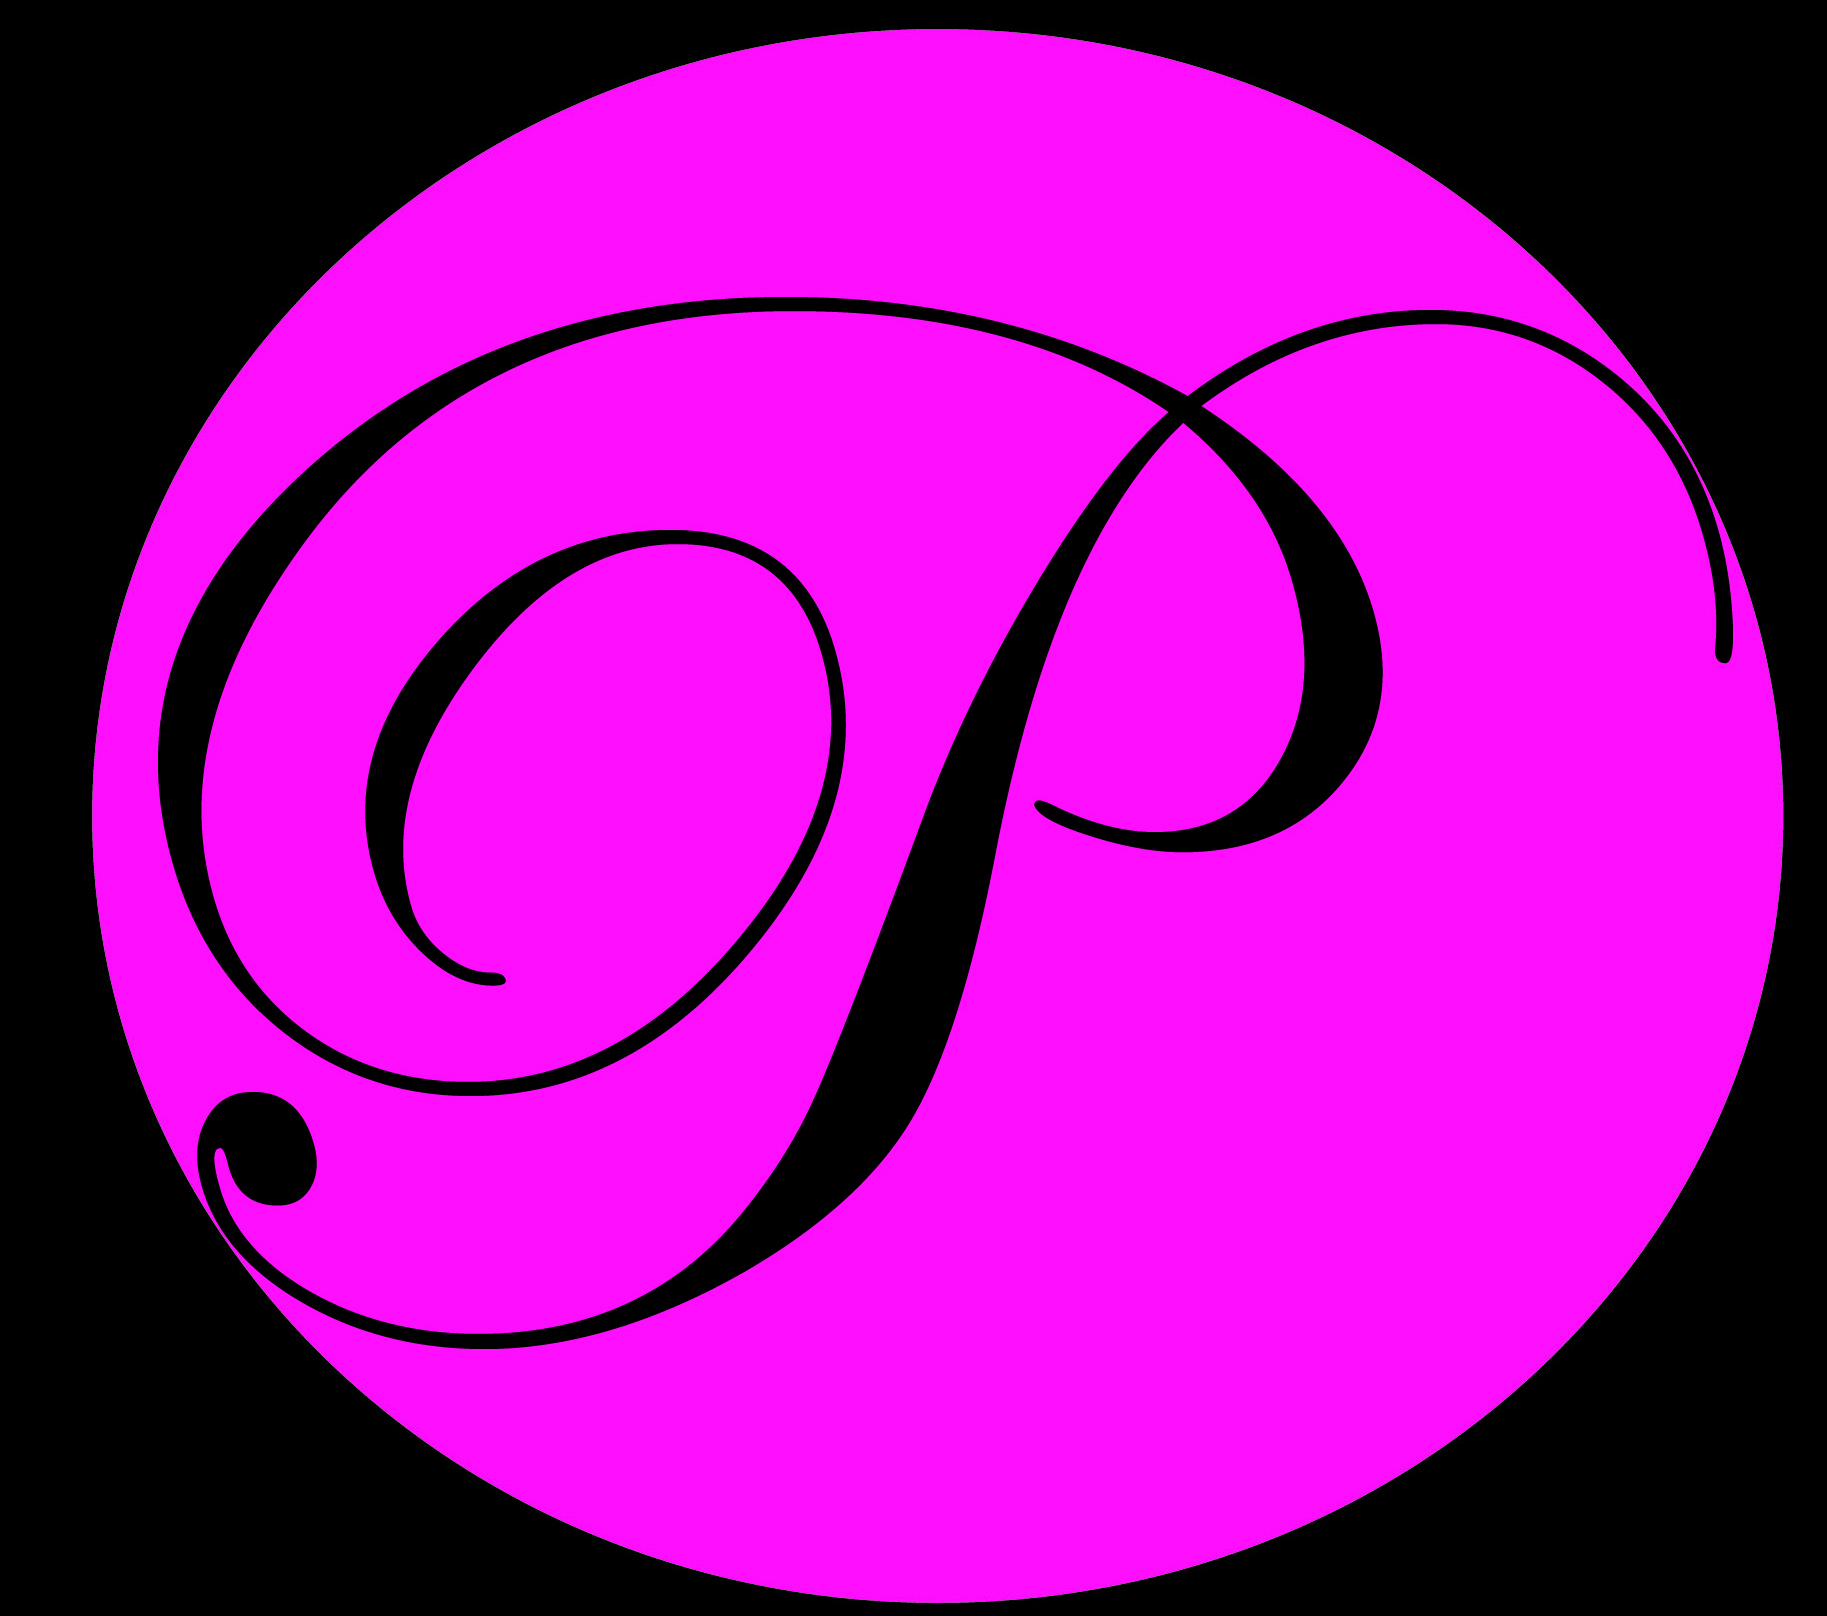 P for blog header logo – The Powder Puff Post